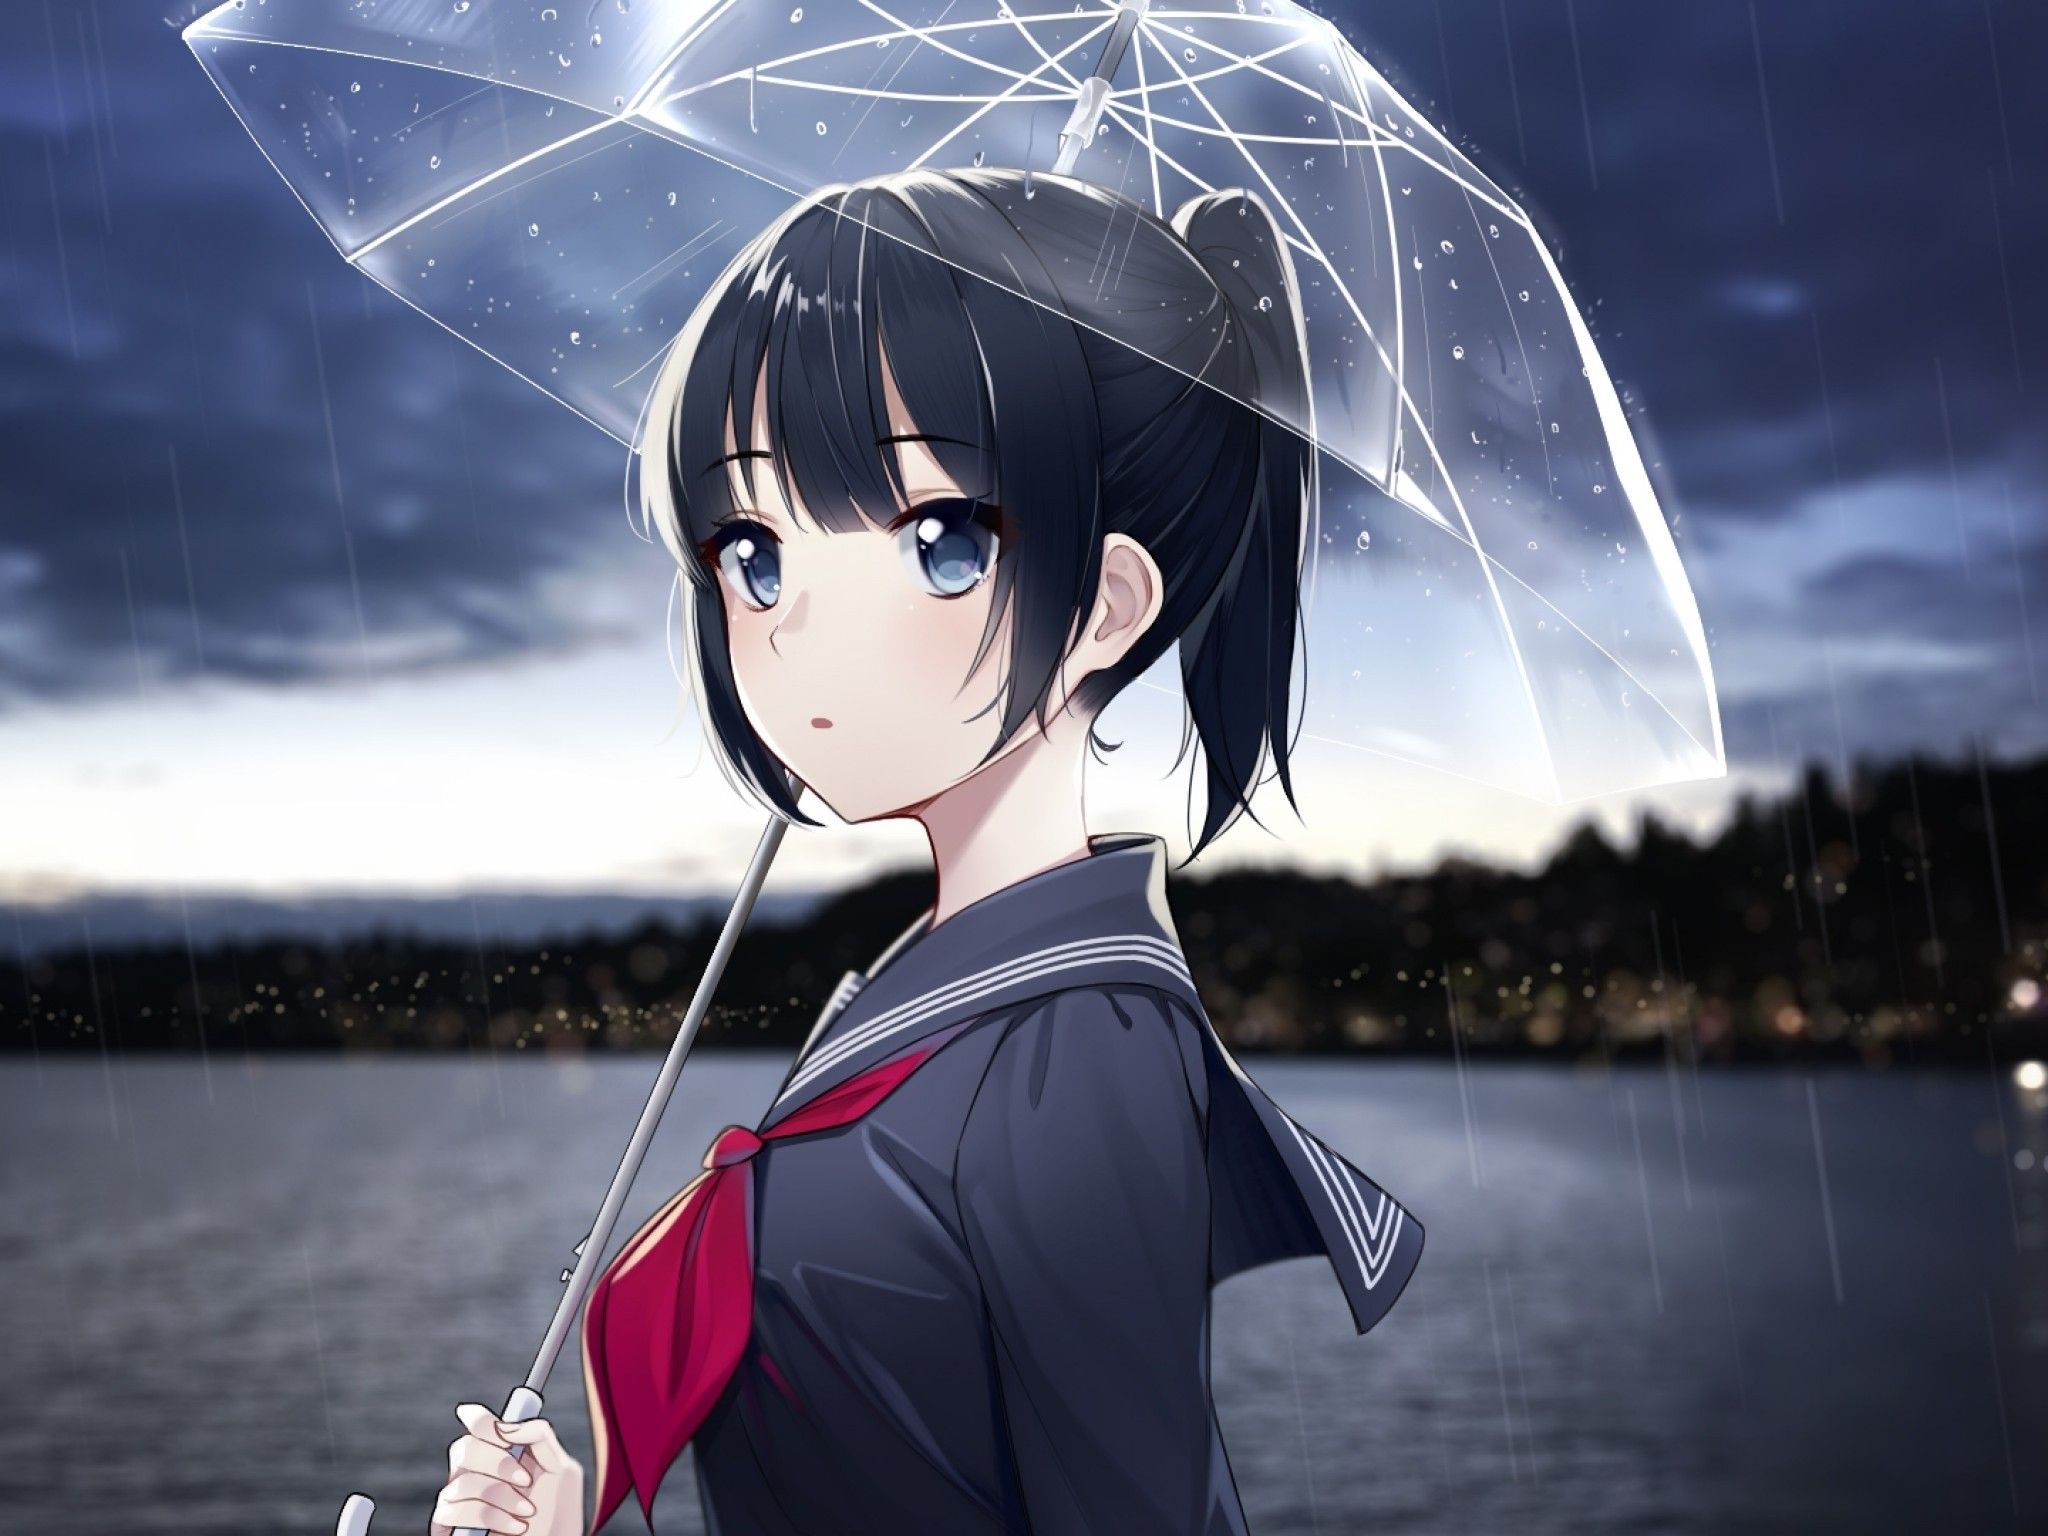 Download 2048x1536 Anime Girl, Raining, Umbrella, Black Hair, Ponytail, Profile View Wallpapers for Ainol Novo 9 Spark